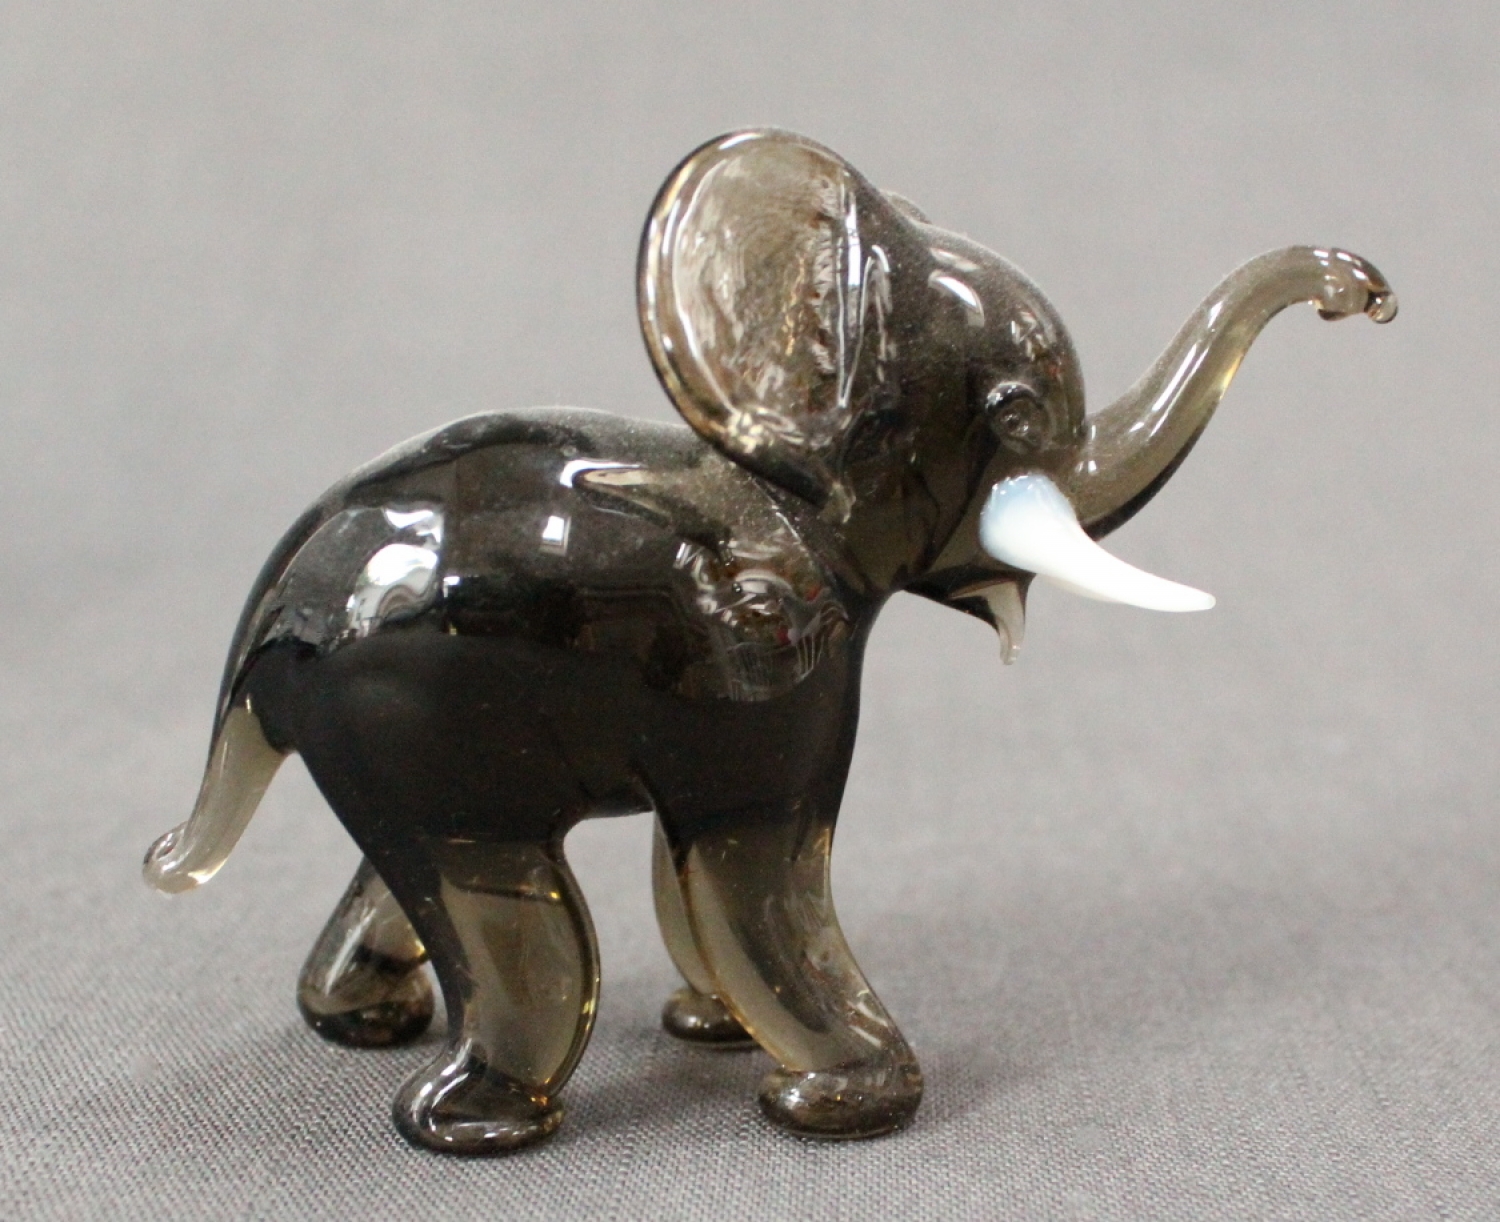 A Murano glass baby elephant